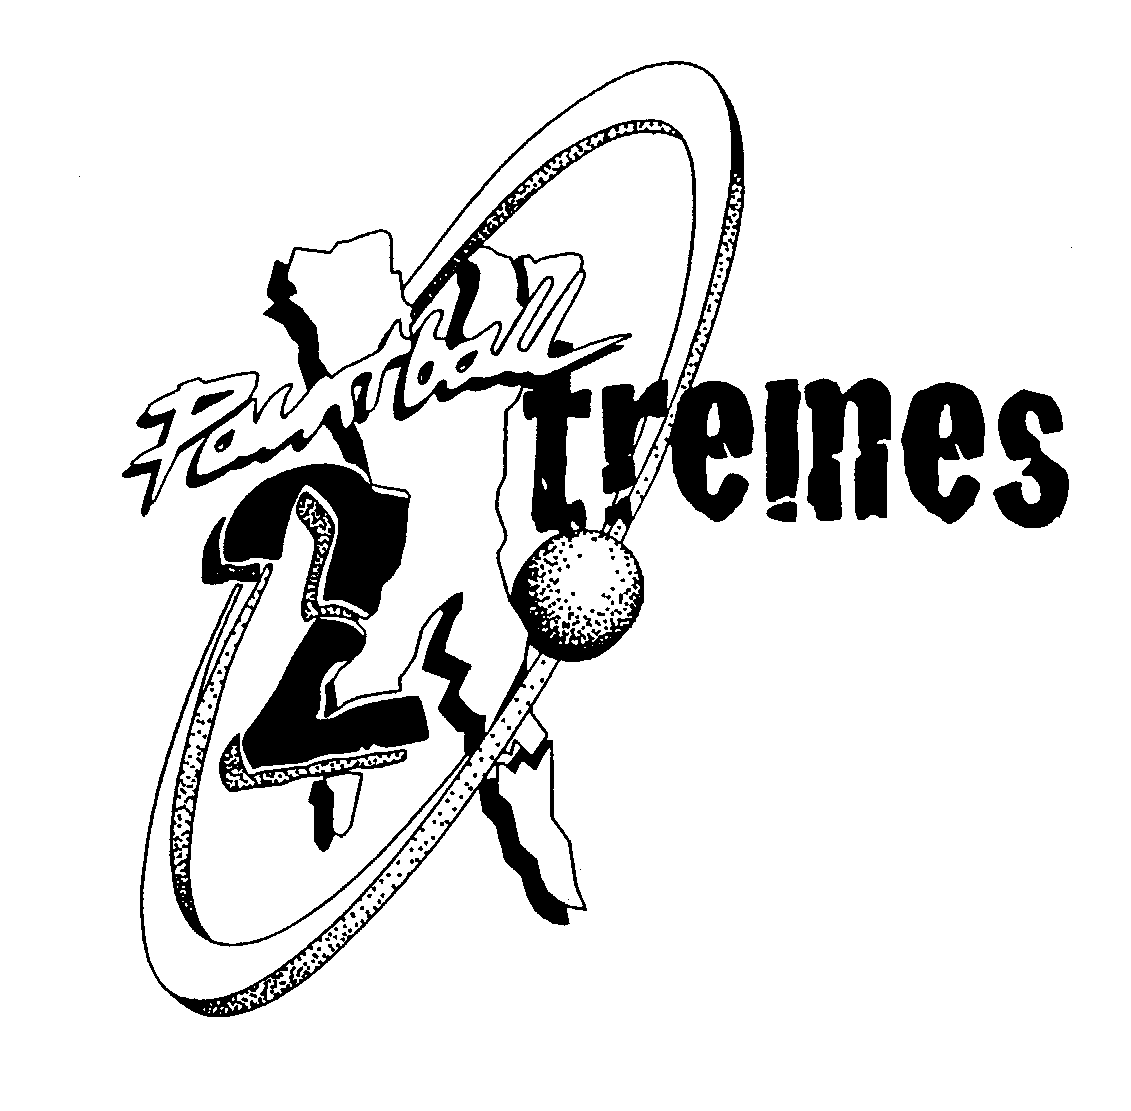 Trademark Logo PAINTBALL2XTREMES